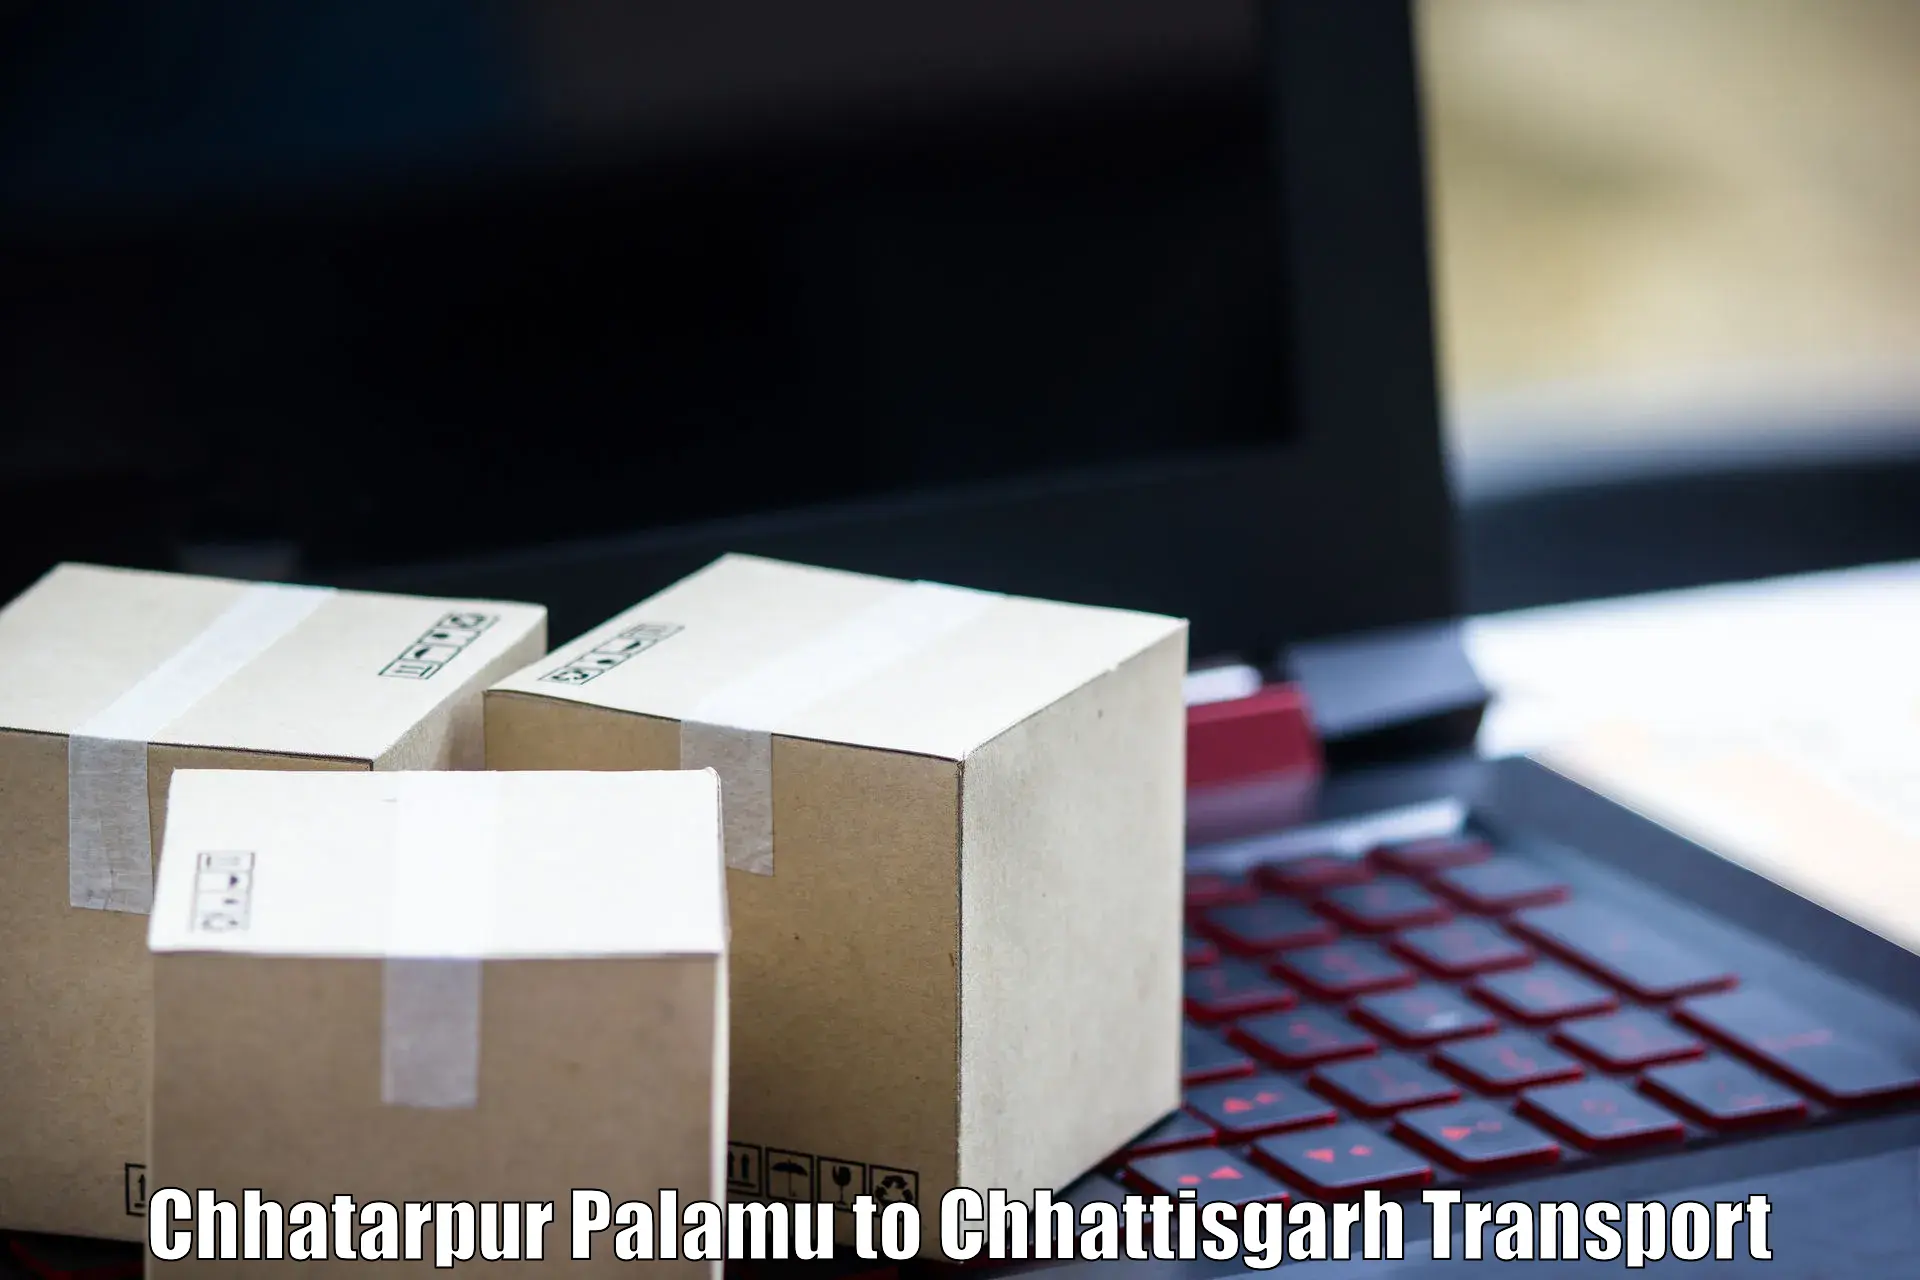 Furniture transport service Chhatarpur Palamu to Patna Chhattisgarh